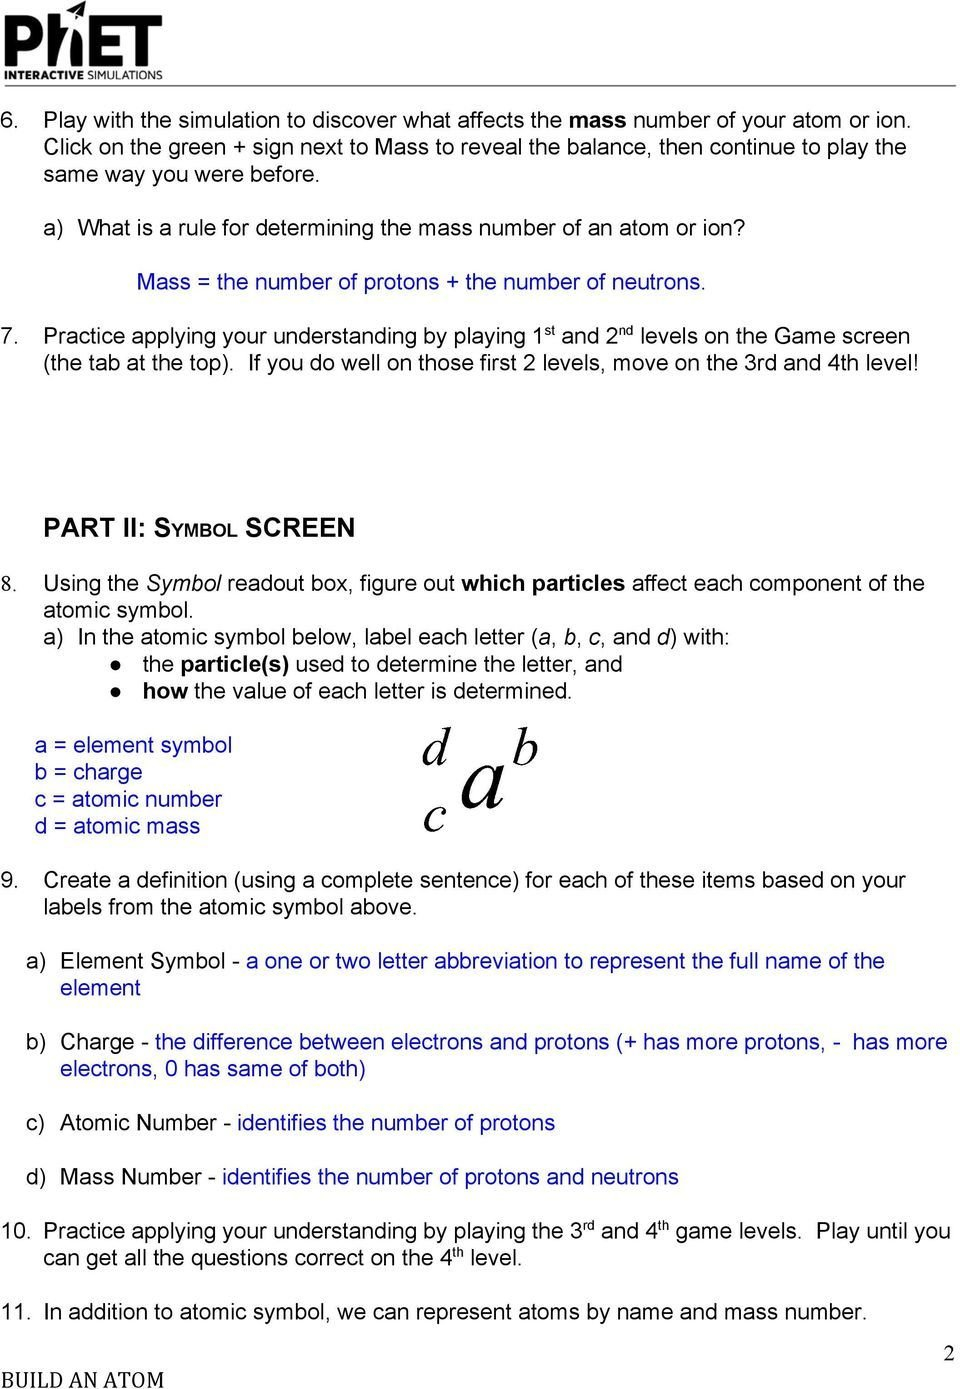 Chapter 3 Section 1 Basic Principles Worksheet Answers  Briefencounters Or Chapter 3 Section 1 Basic Principles Worksheet Answers